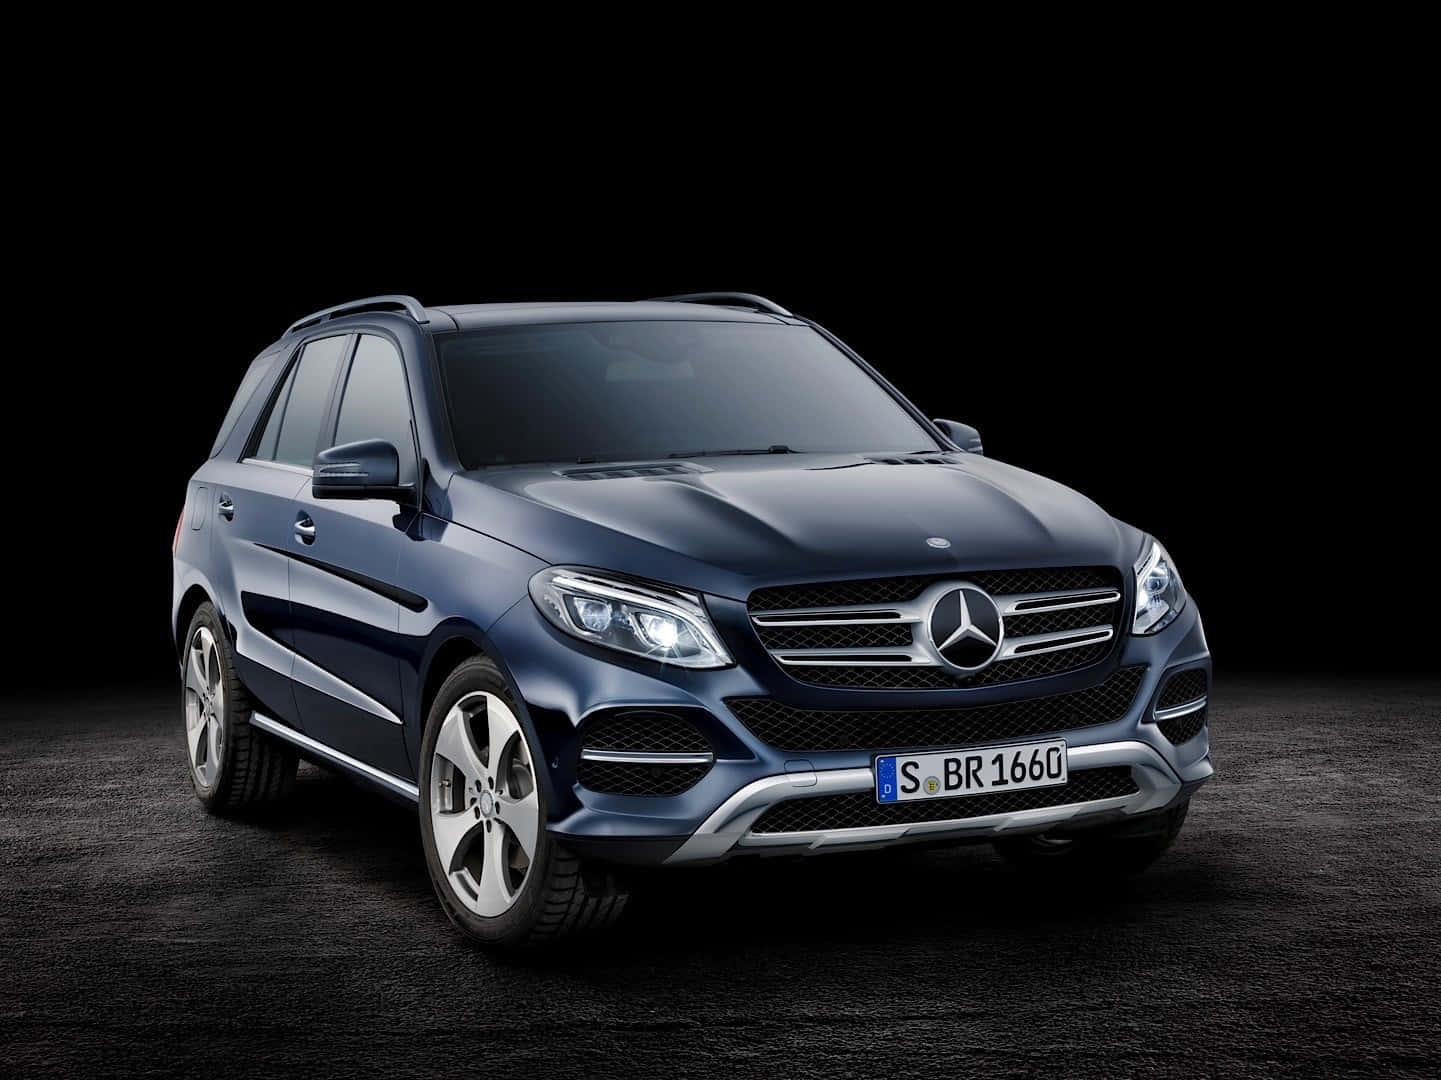 Stunning Mercedes-Benz GLE-Class in motion Wallpaper